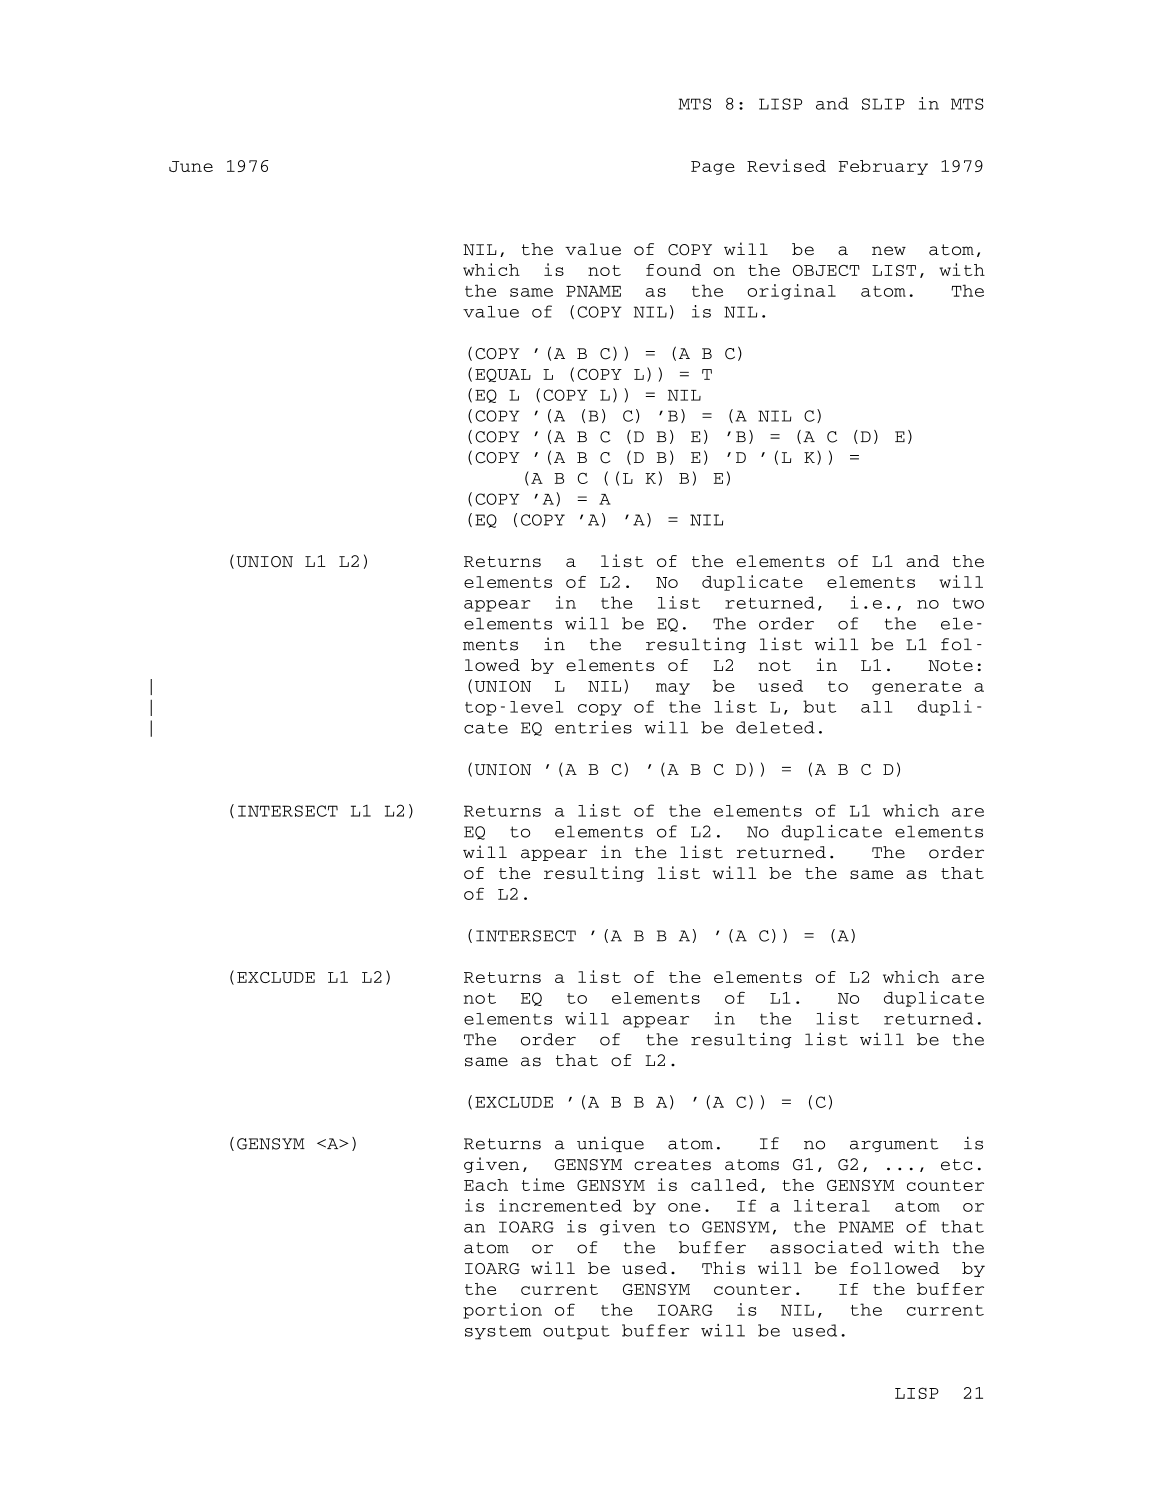 MTS Volume 8 - LISP and SLIP page 20